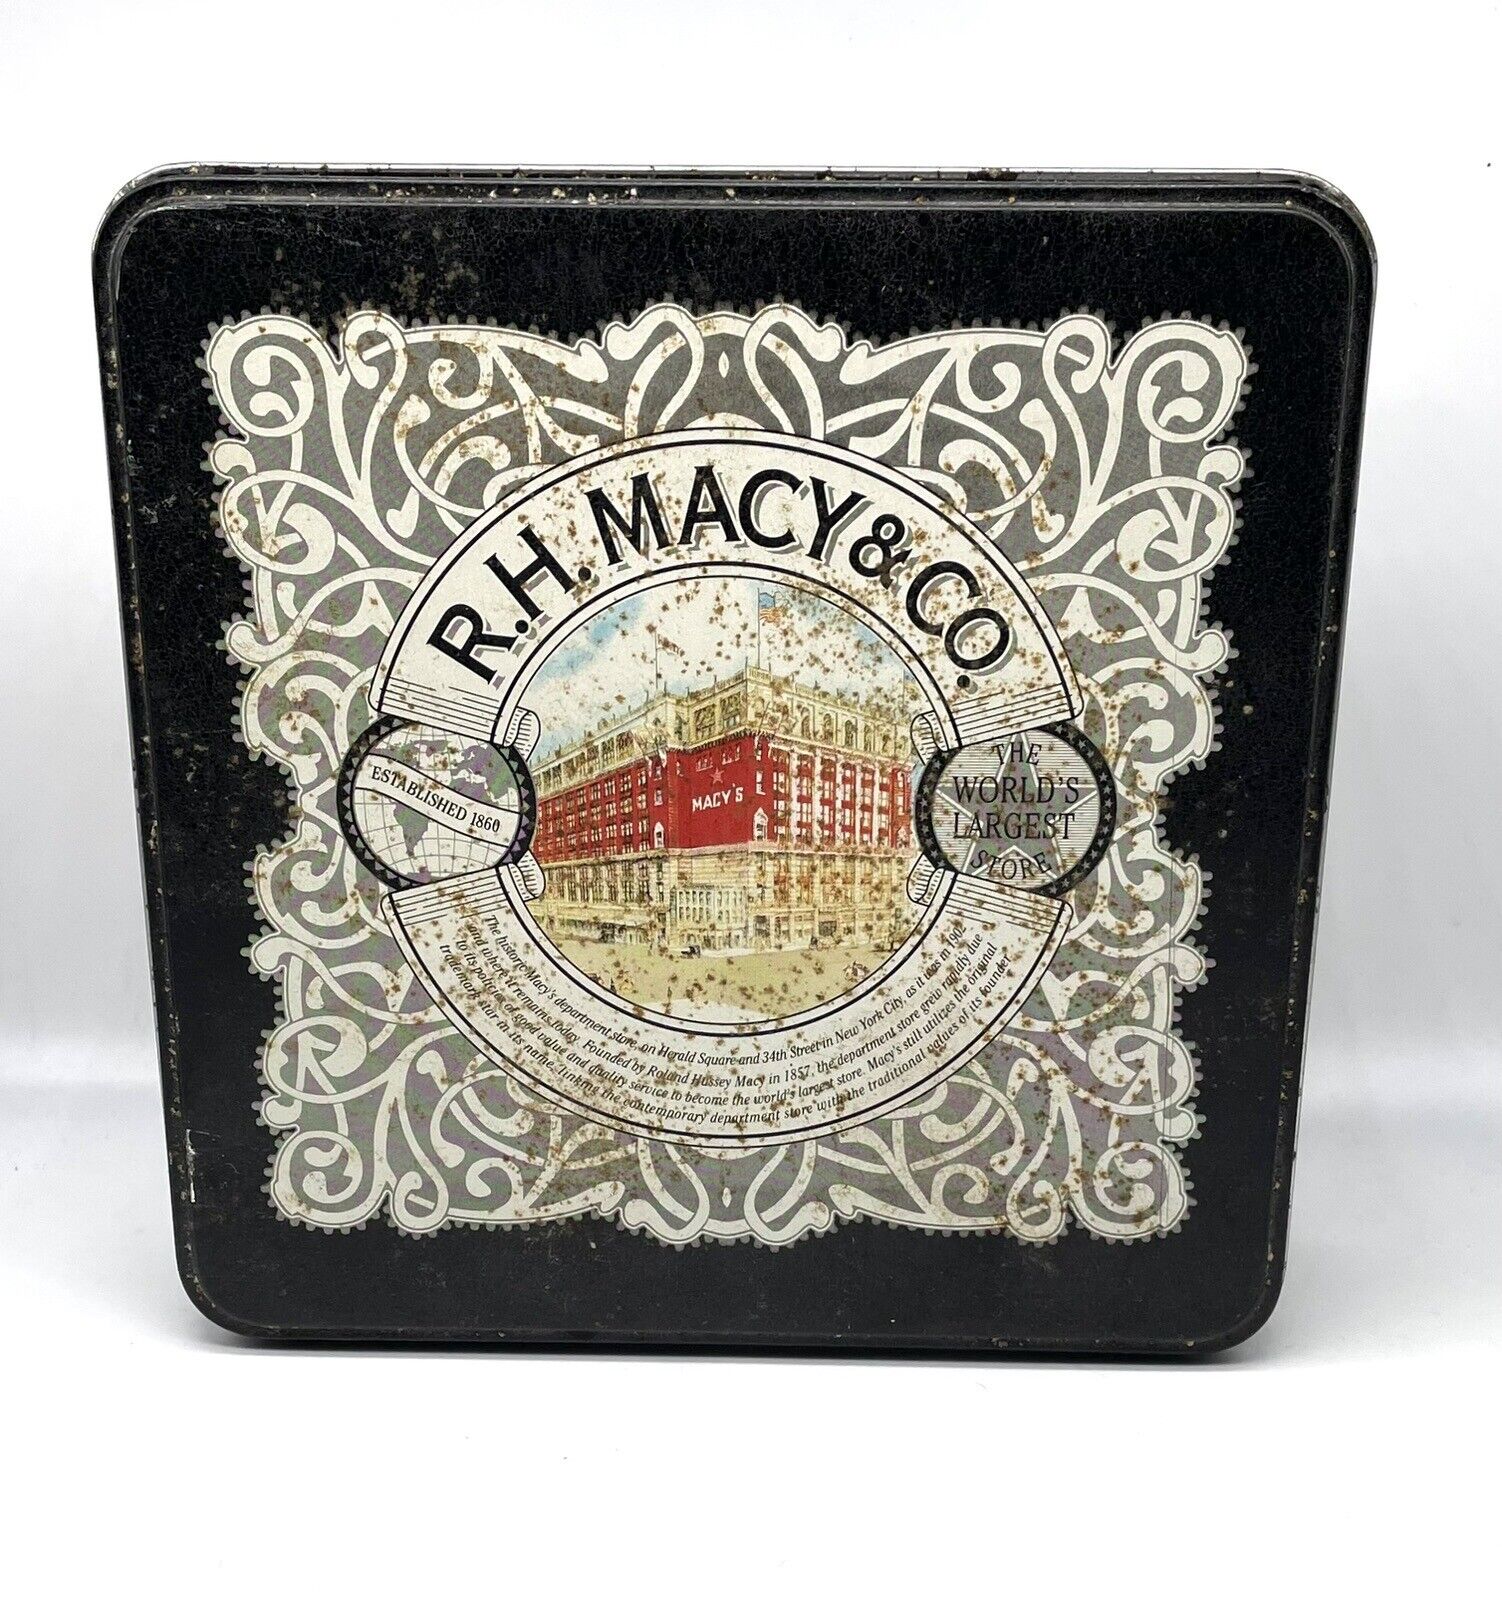 Vintage R.H. MACYS & CO New York City Advertisement Empty Tin Can 8x8” Tin Box R